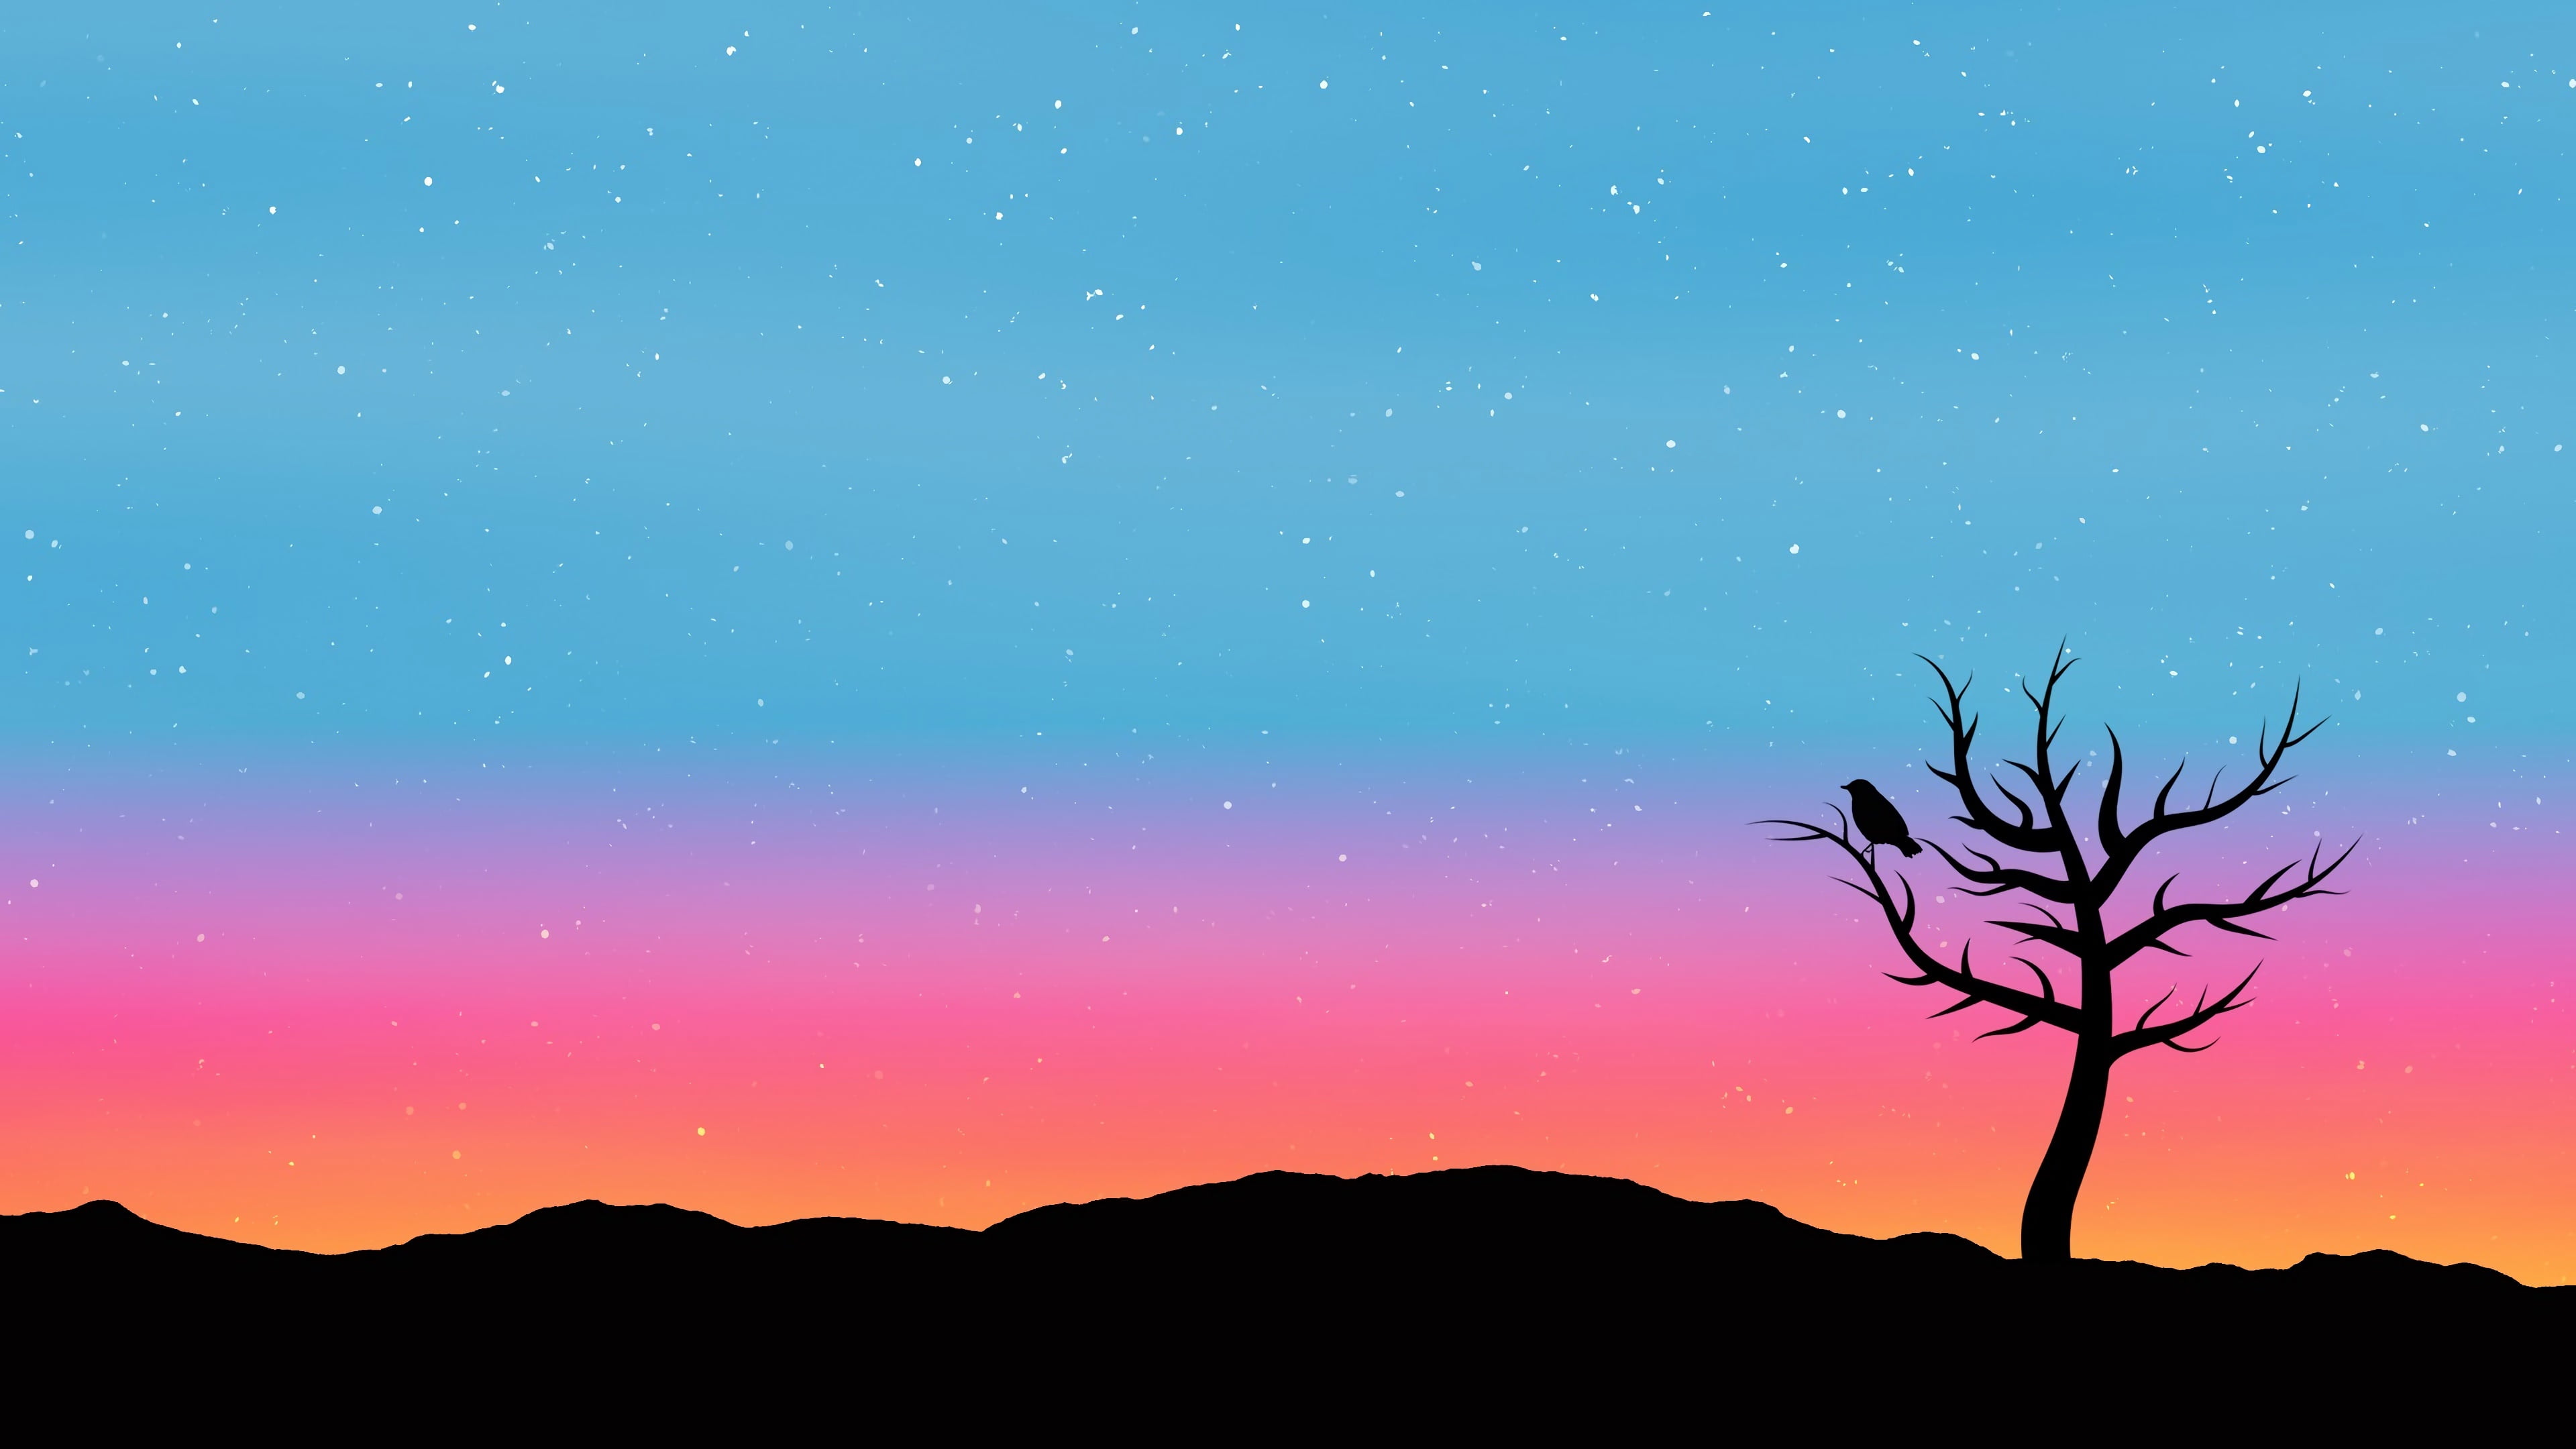 nigh sky, illustration, tree, silhouette, blue, star - space